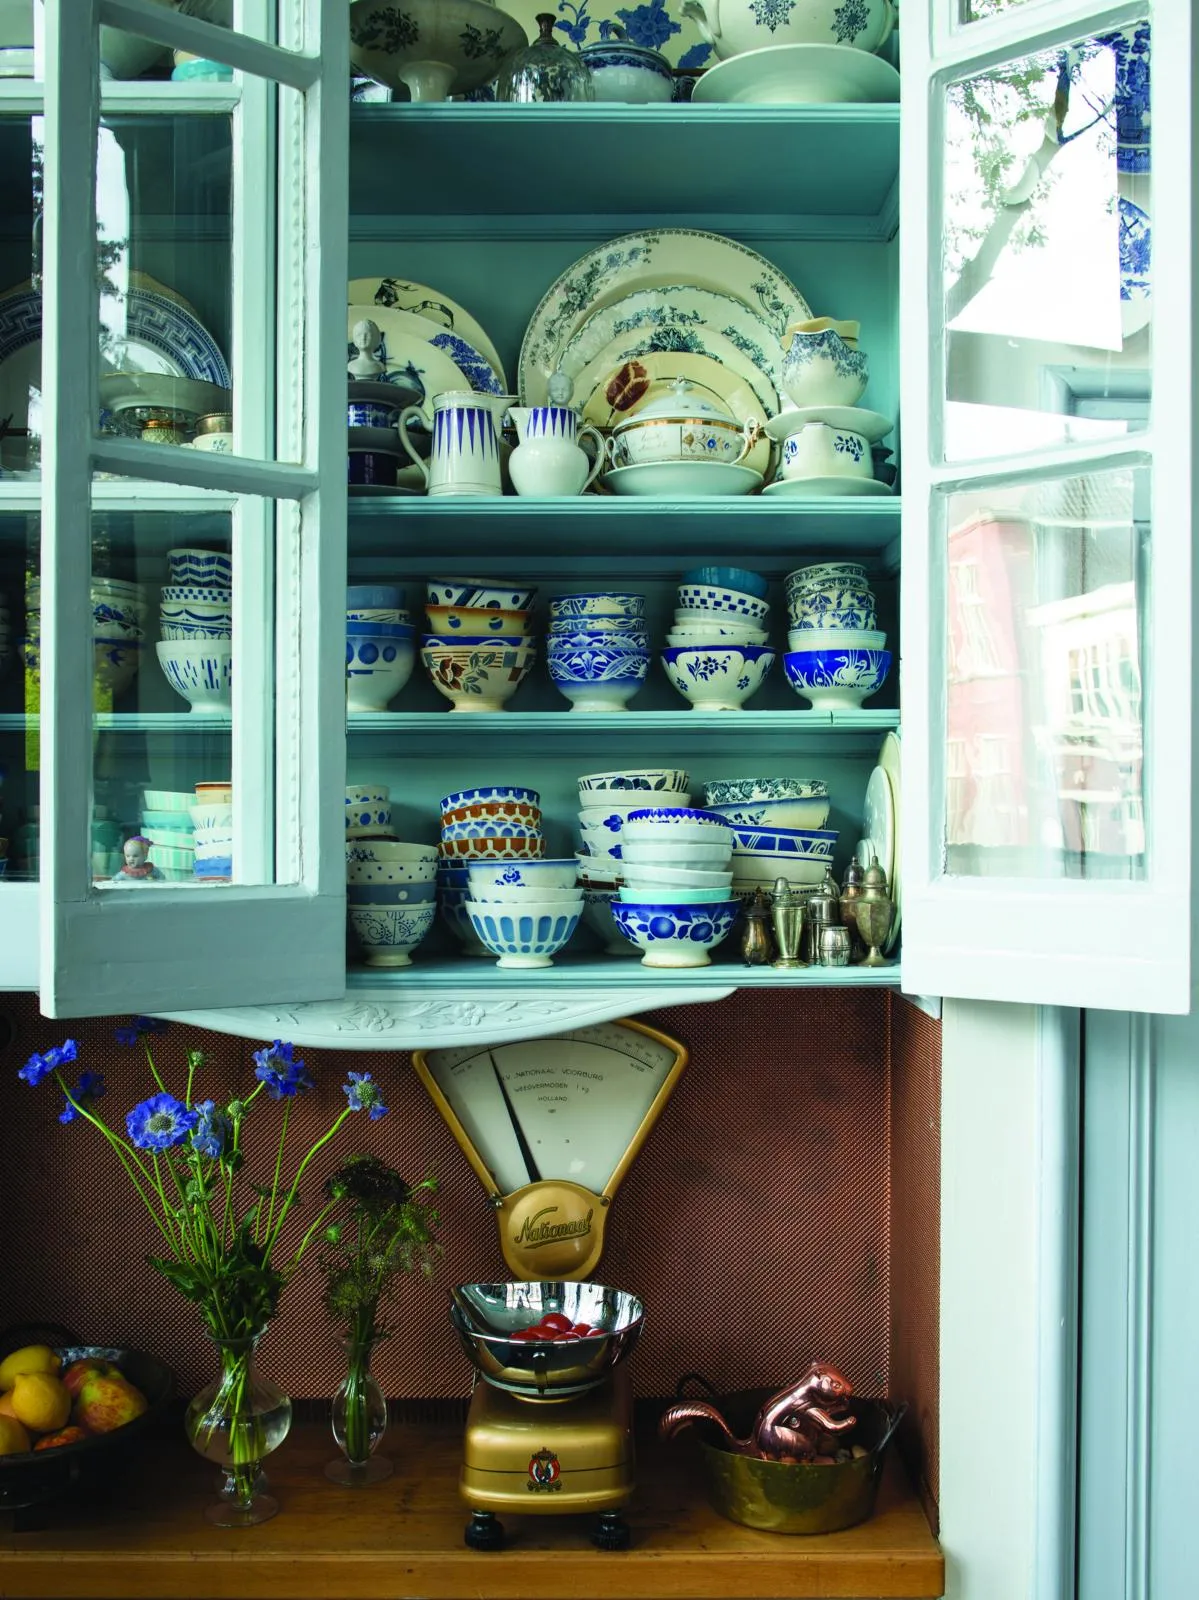 18th-century Amsterdam home kitchen cupboard display